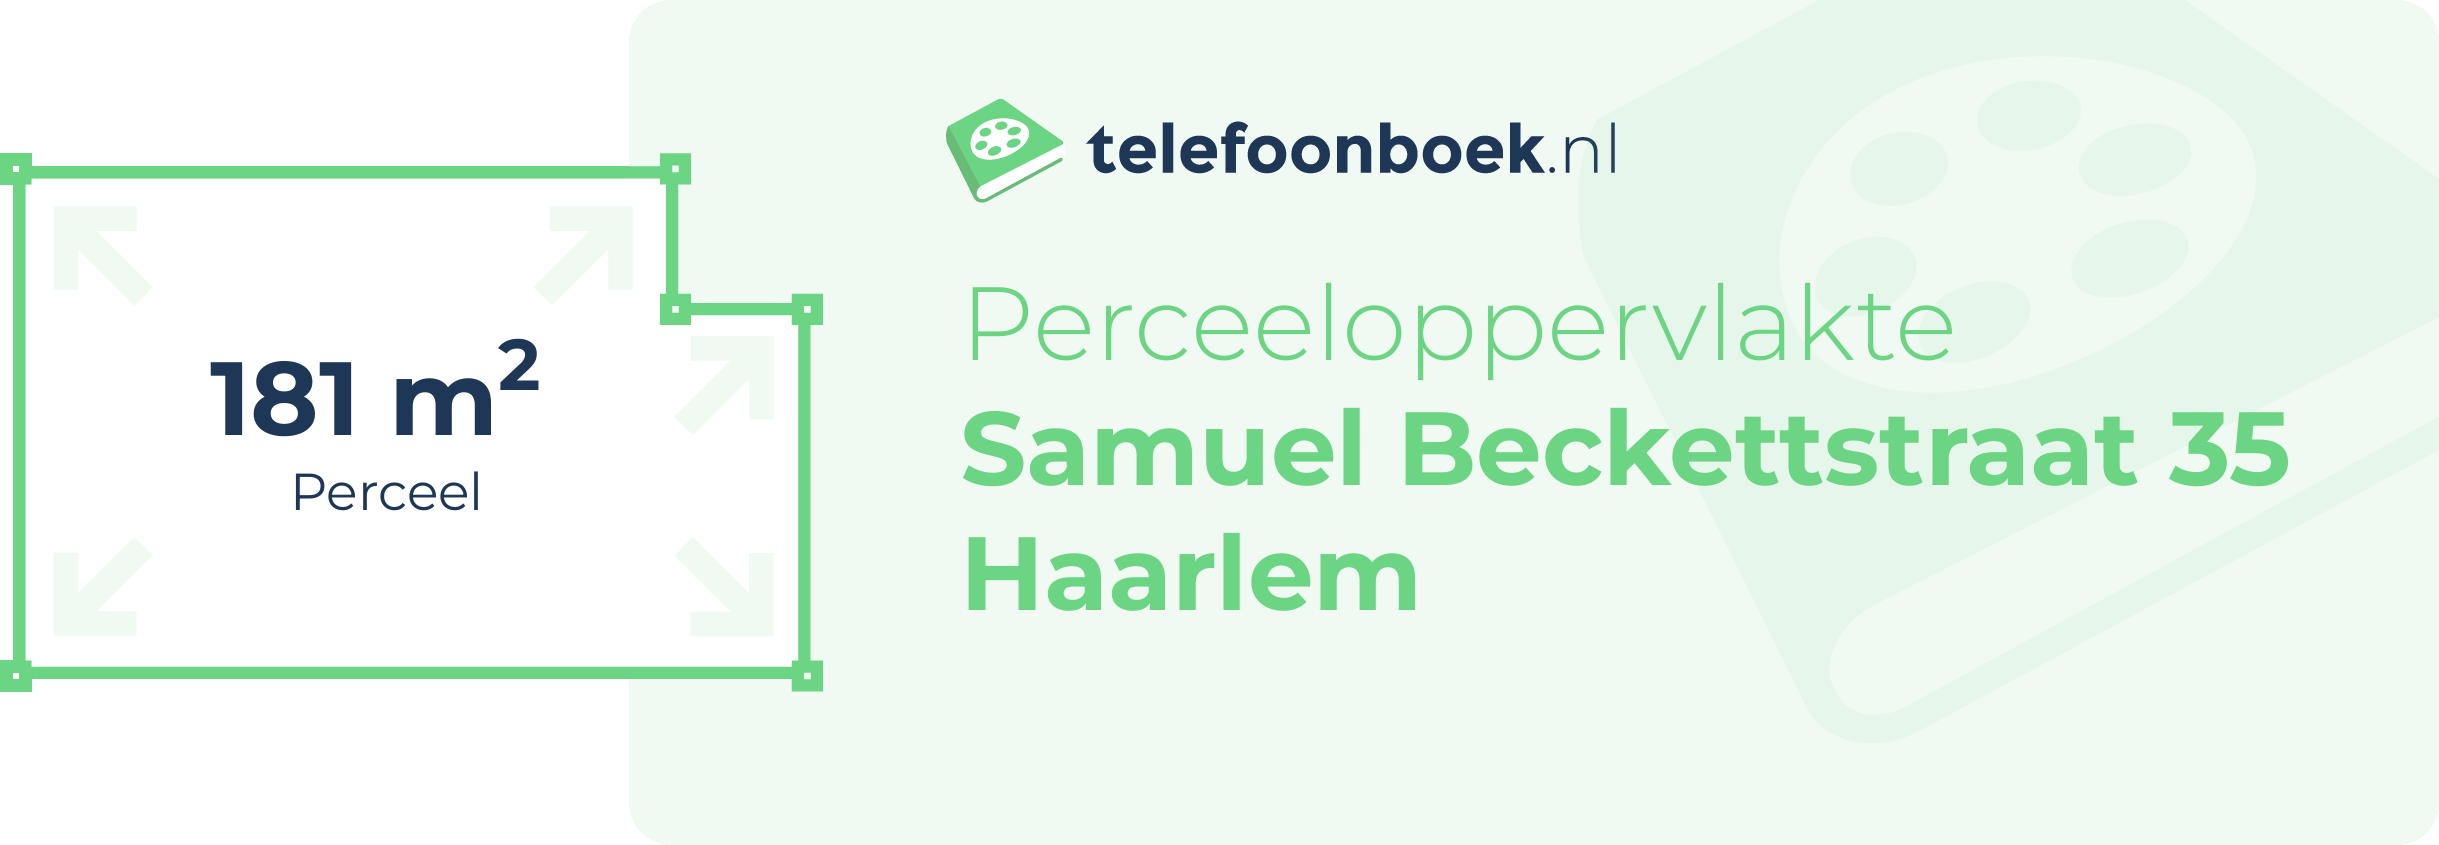 Perceeloppervlakte Samuel Beckettstraat 35 Haarlem